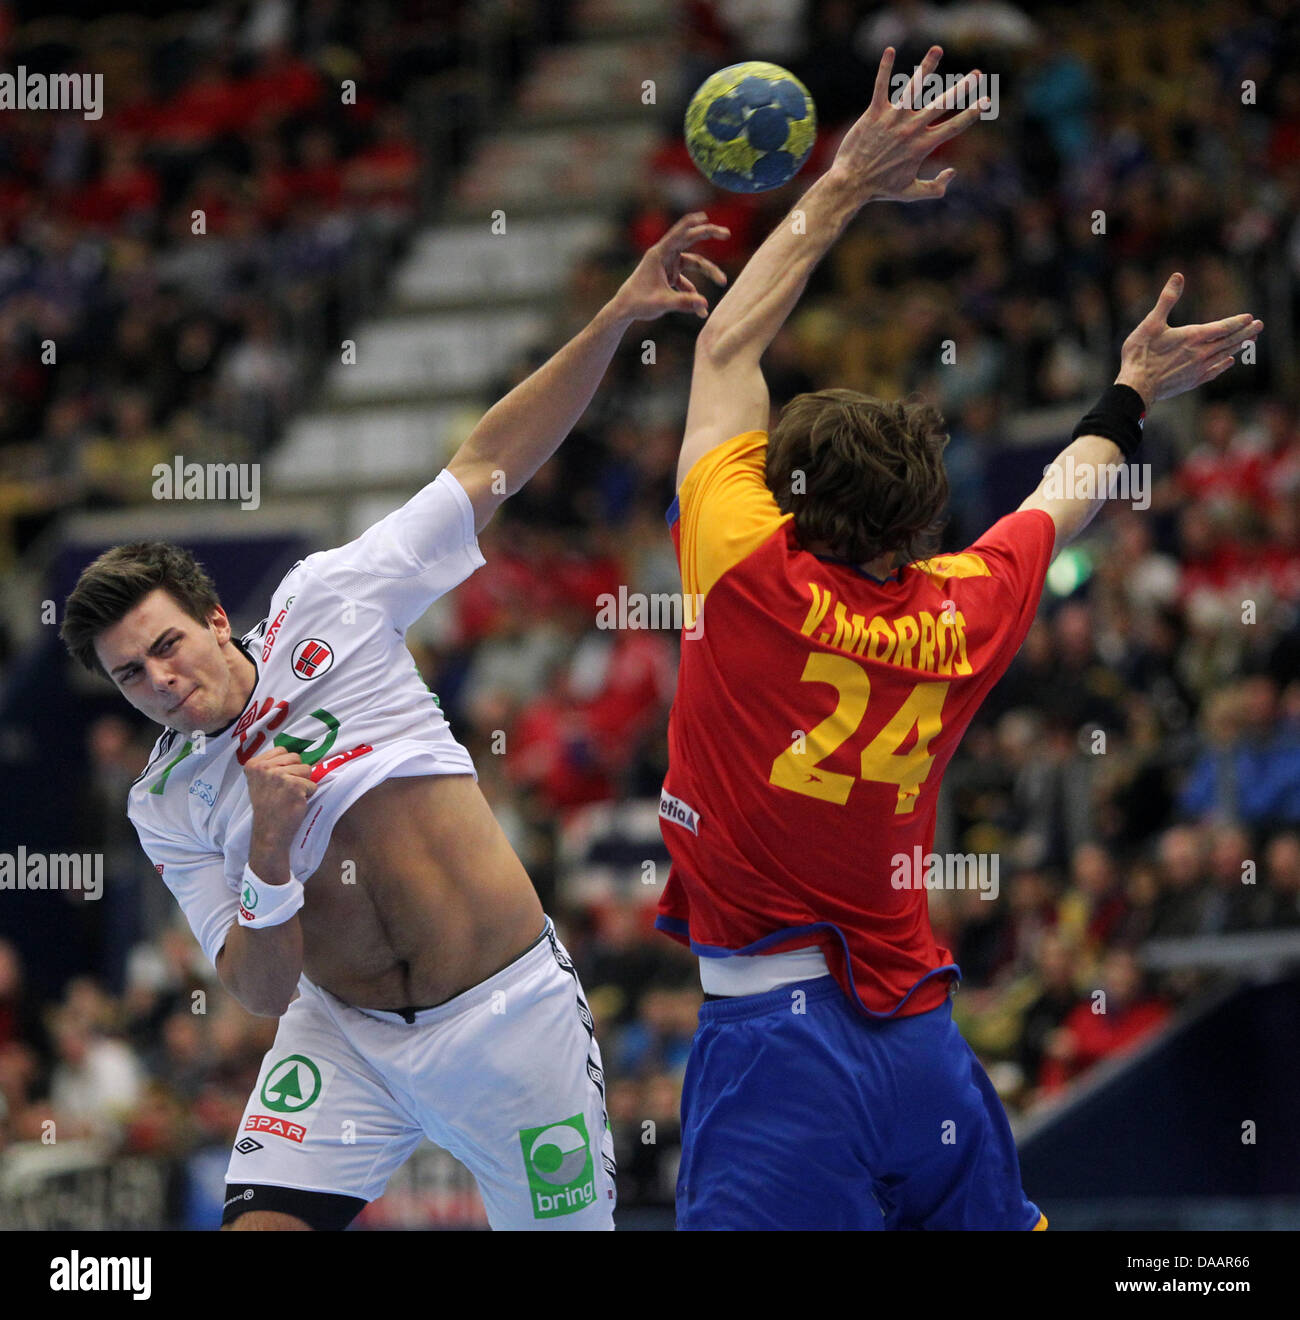 Eivind Tangen of Norway (R) against Viran Morros of Spain during the Men's  Handball World Championship